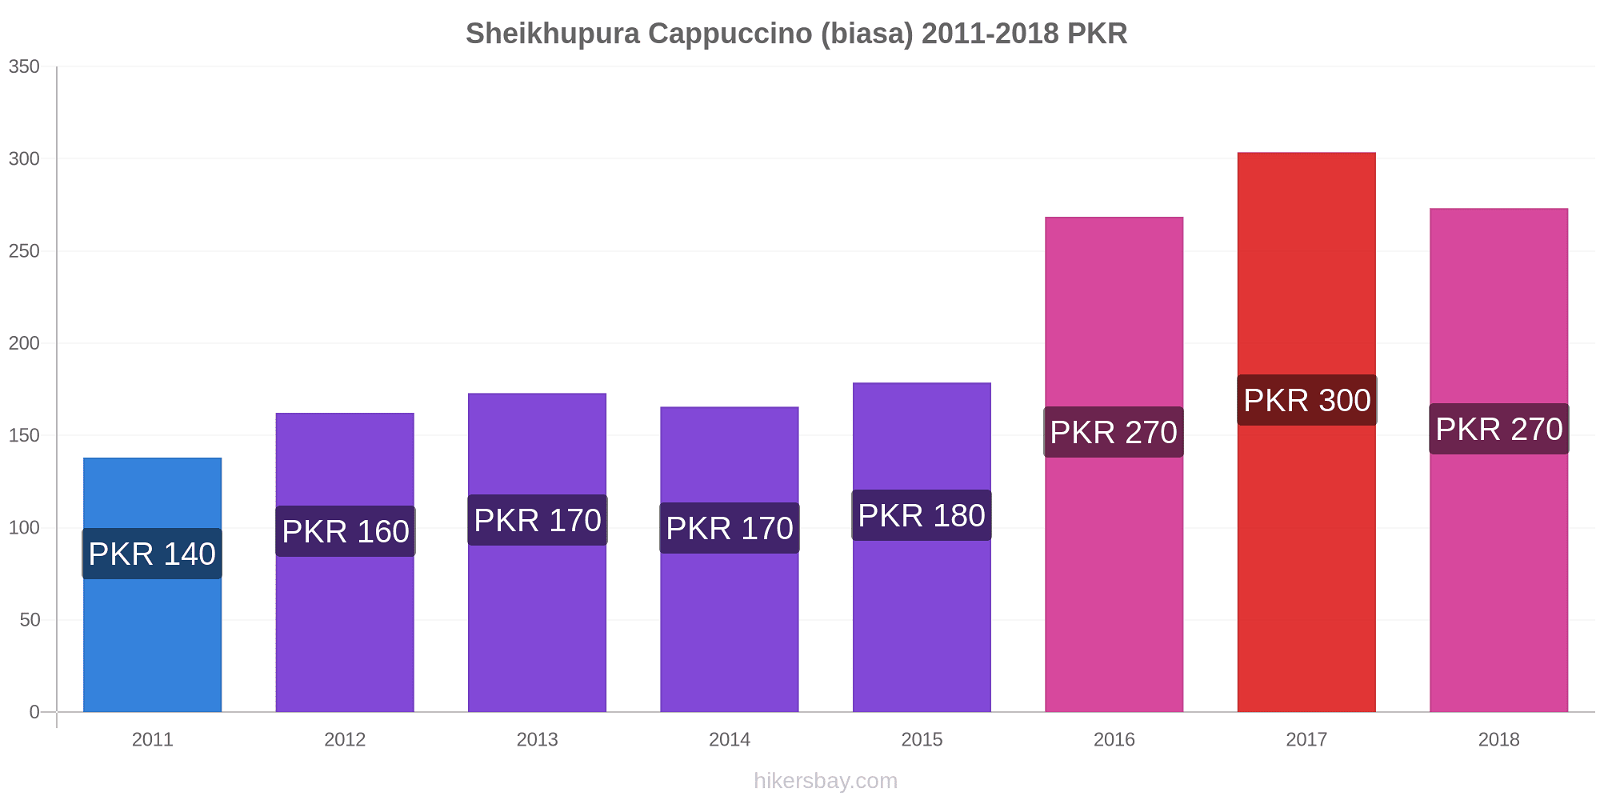 Sheikhupura perubahan harga Cappuccino (biasa) hikersbay.com